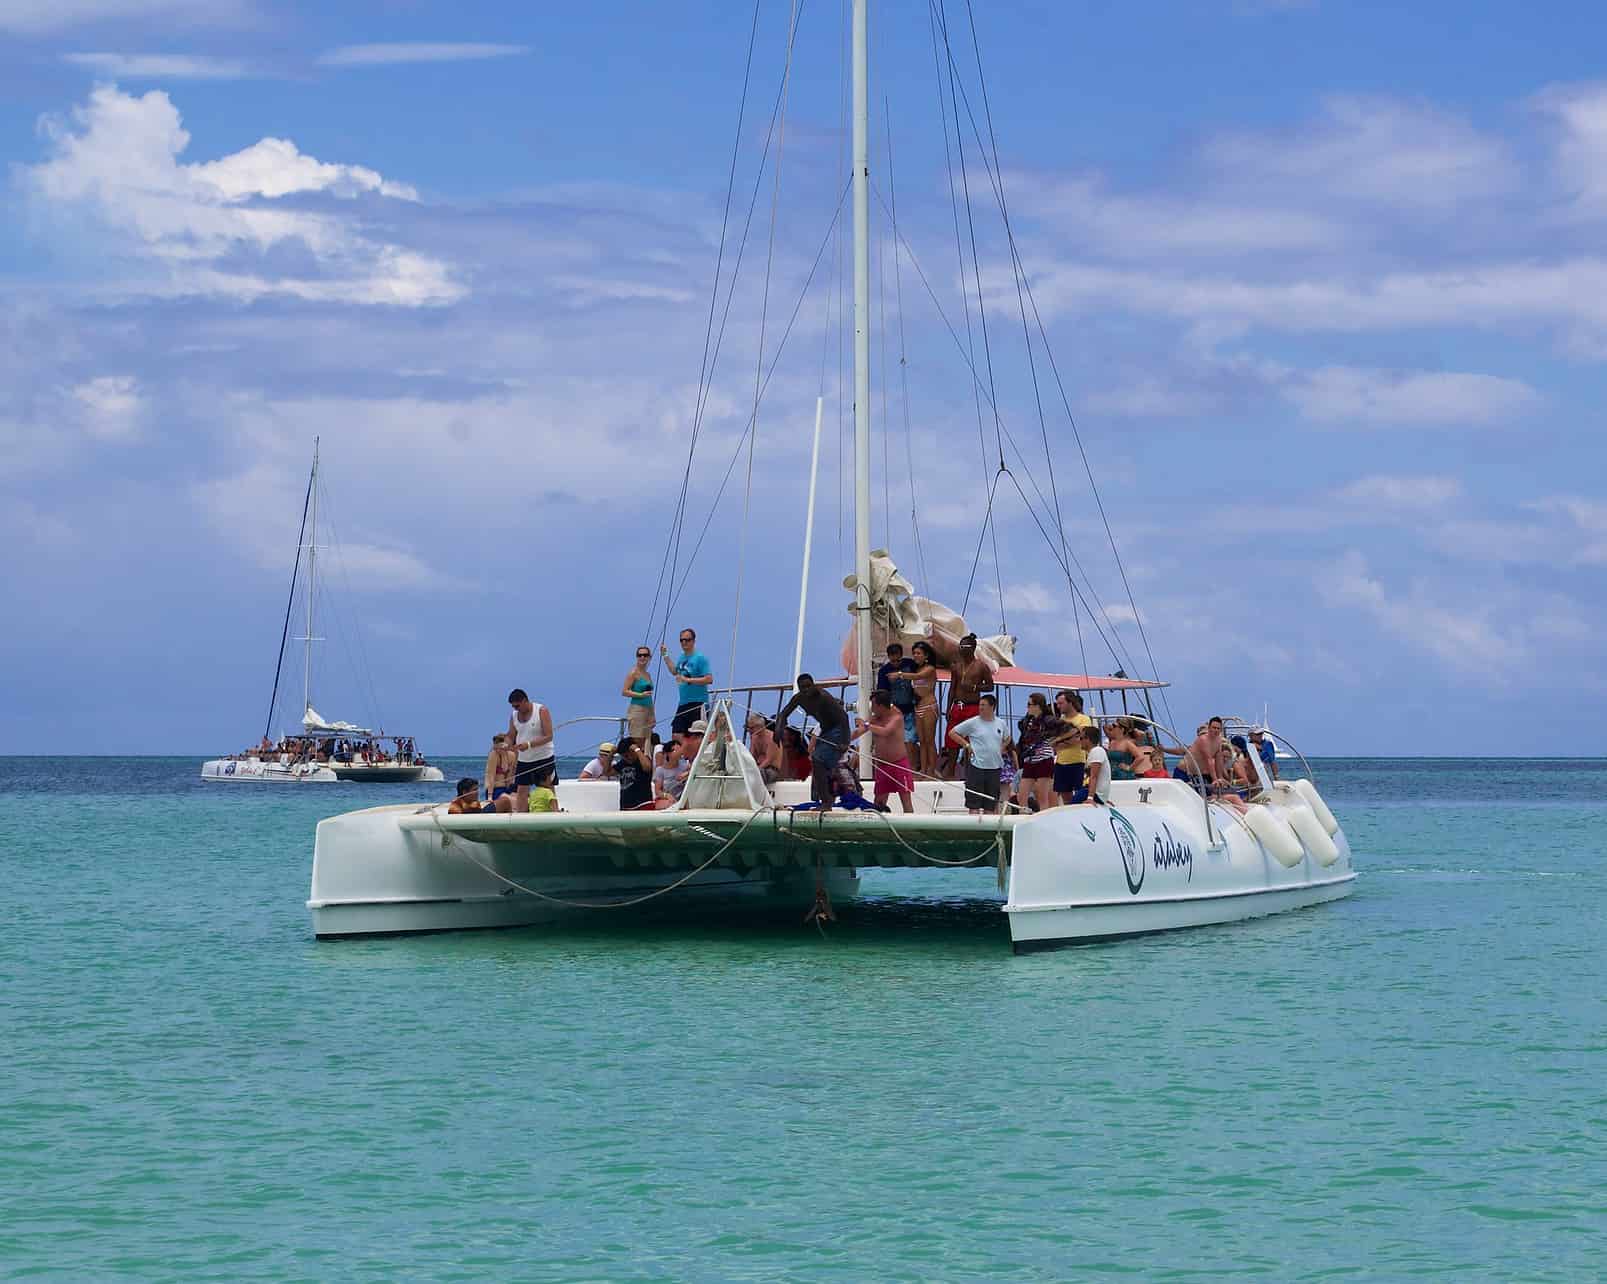 Catamaran to Saona Island Dominican Republic - Flickr Channone Arif